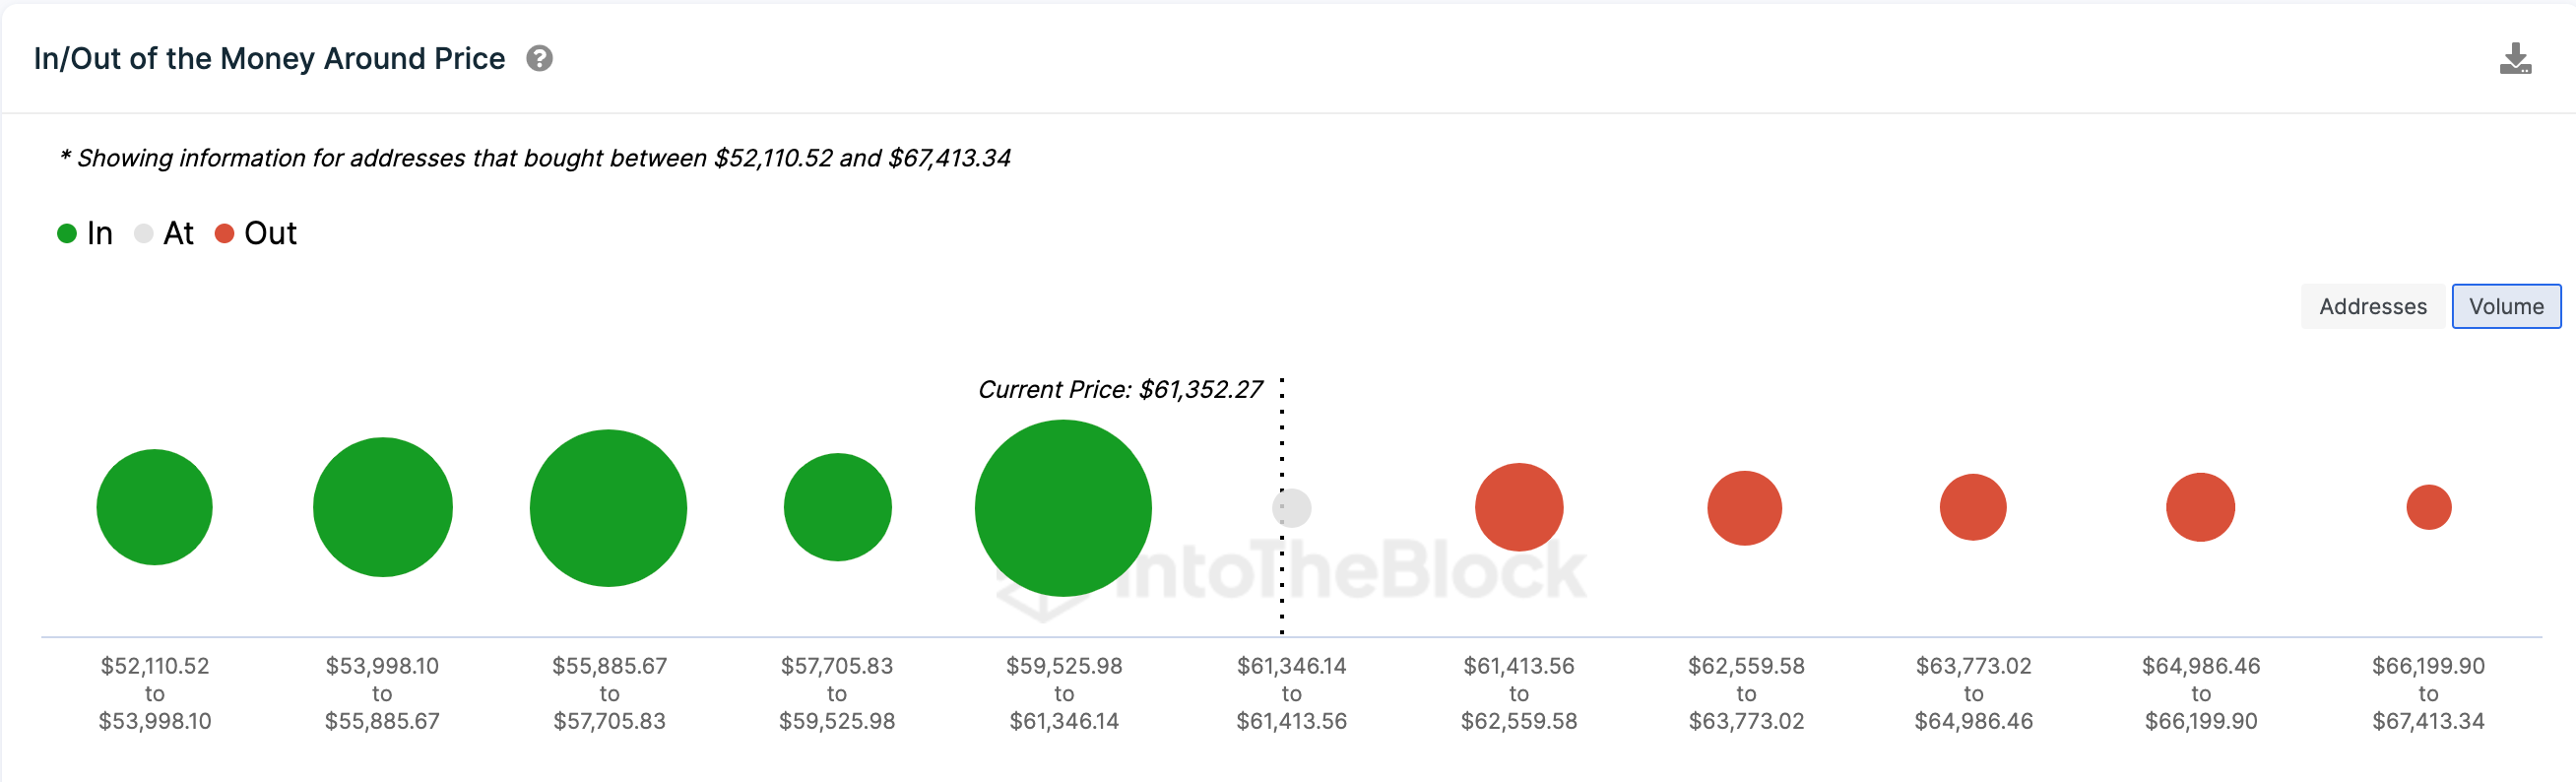 Bitcoin (BTC) Price Forecast | Source: IntoTheBlock